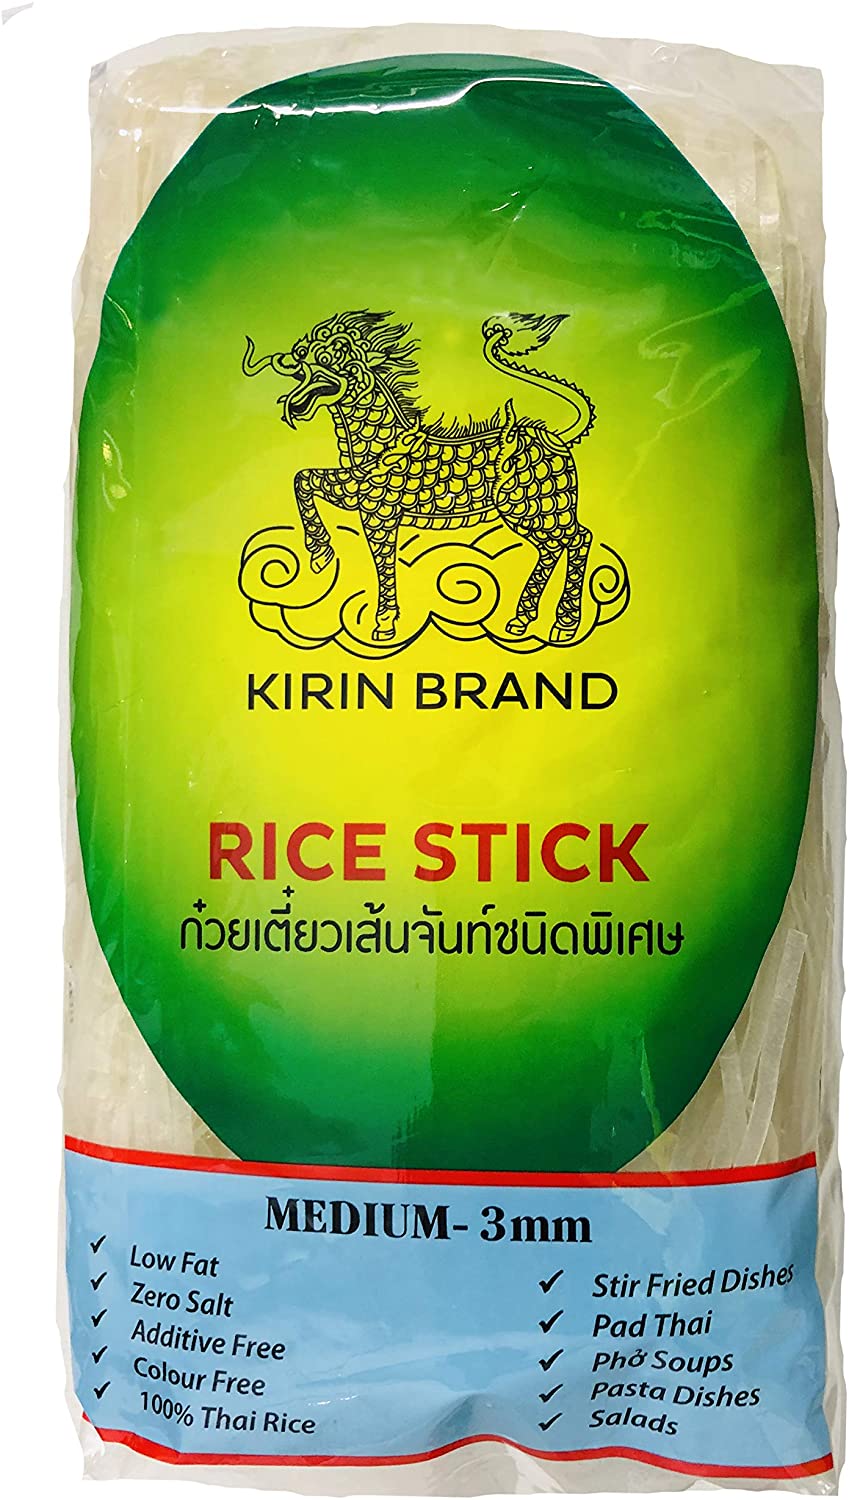 Kirin Rice Stick 3mm M size 400g